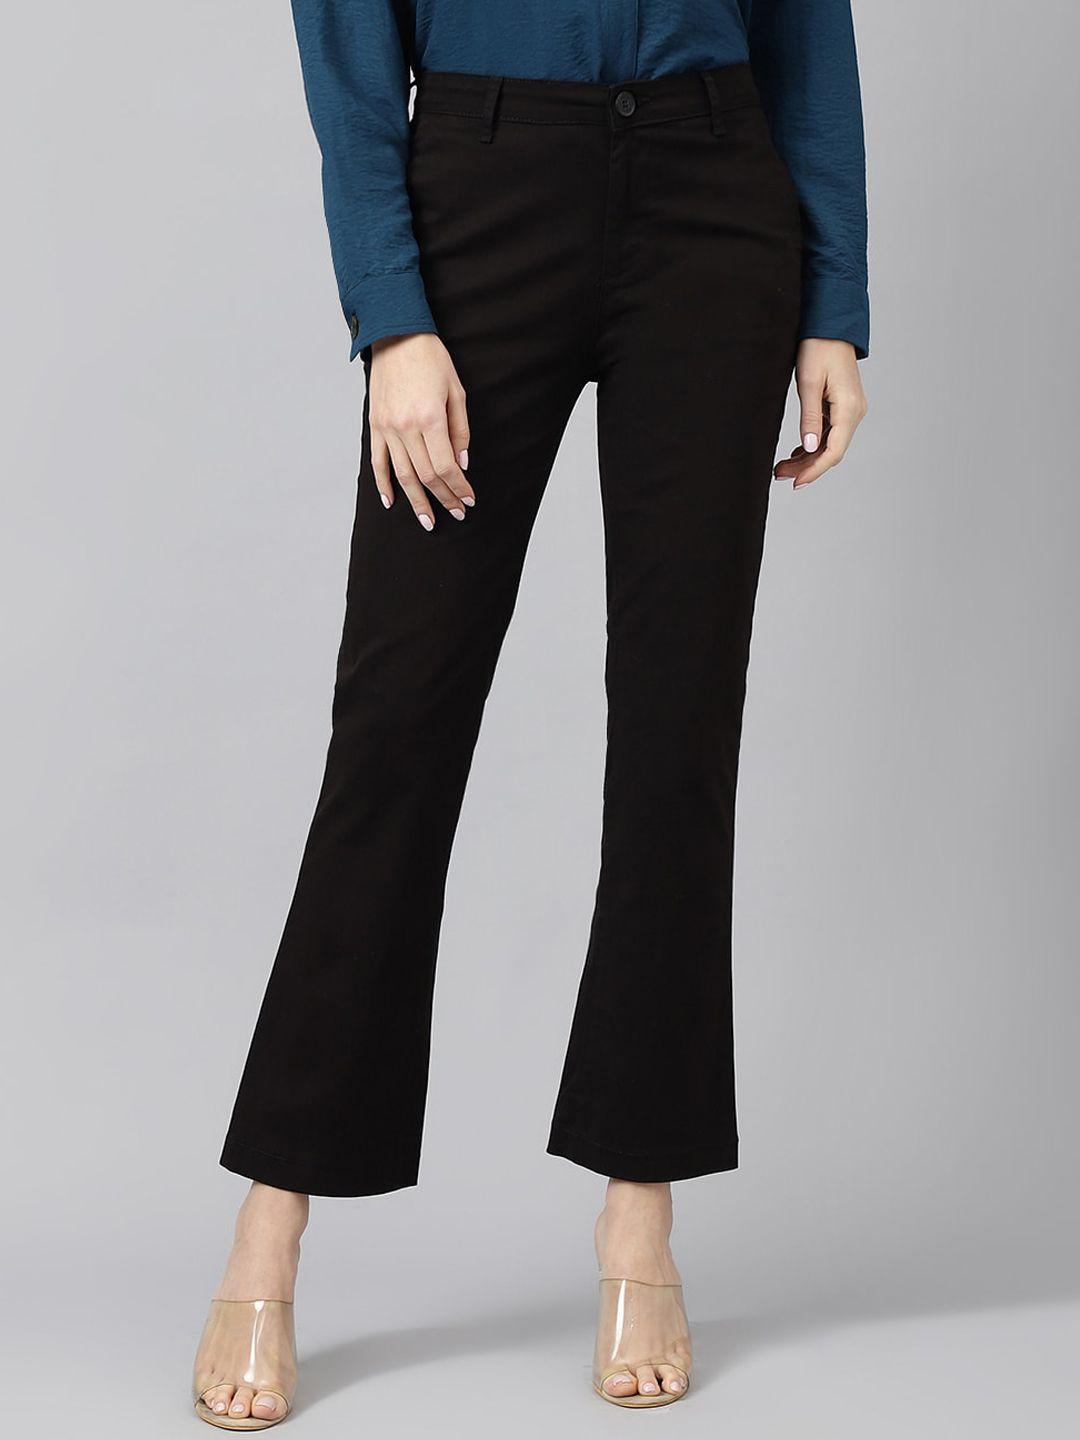 xpose-women-comfort-high-rise-bootcut-trousers